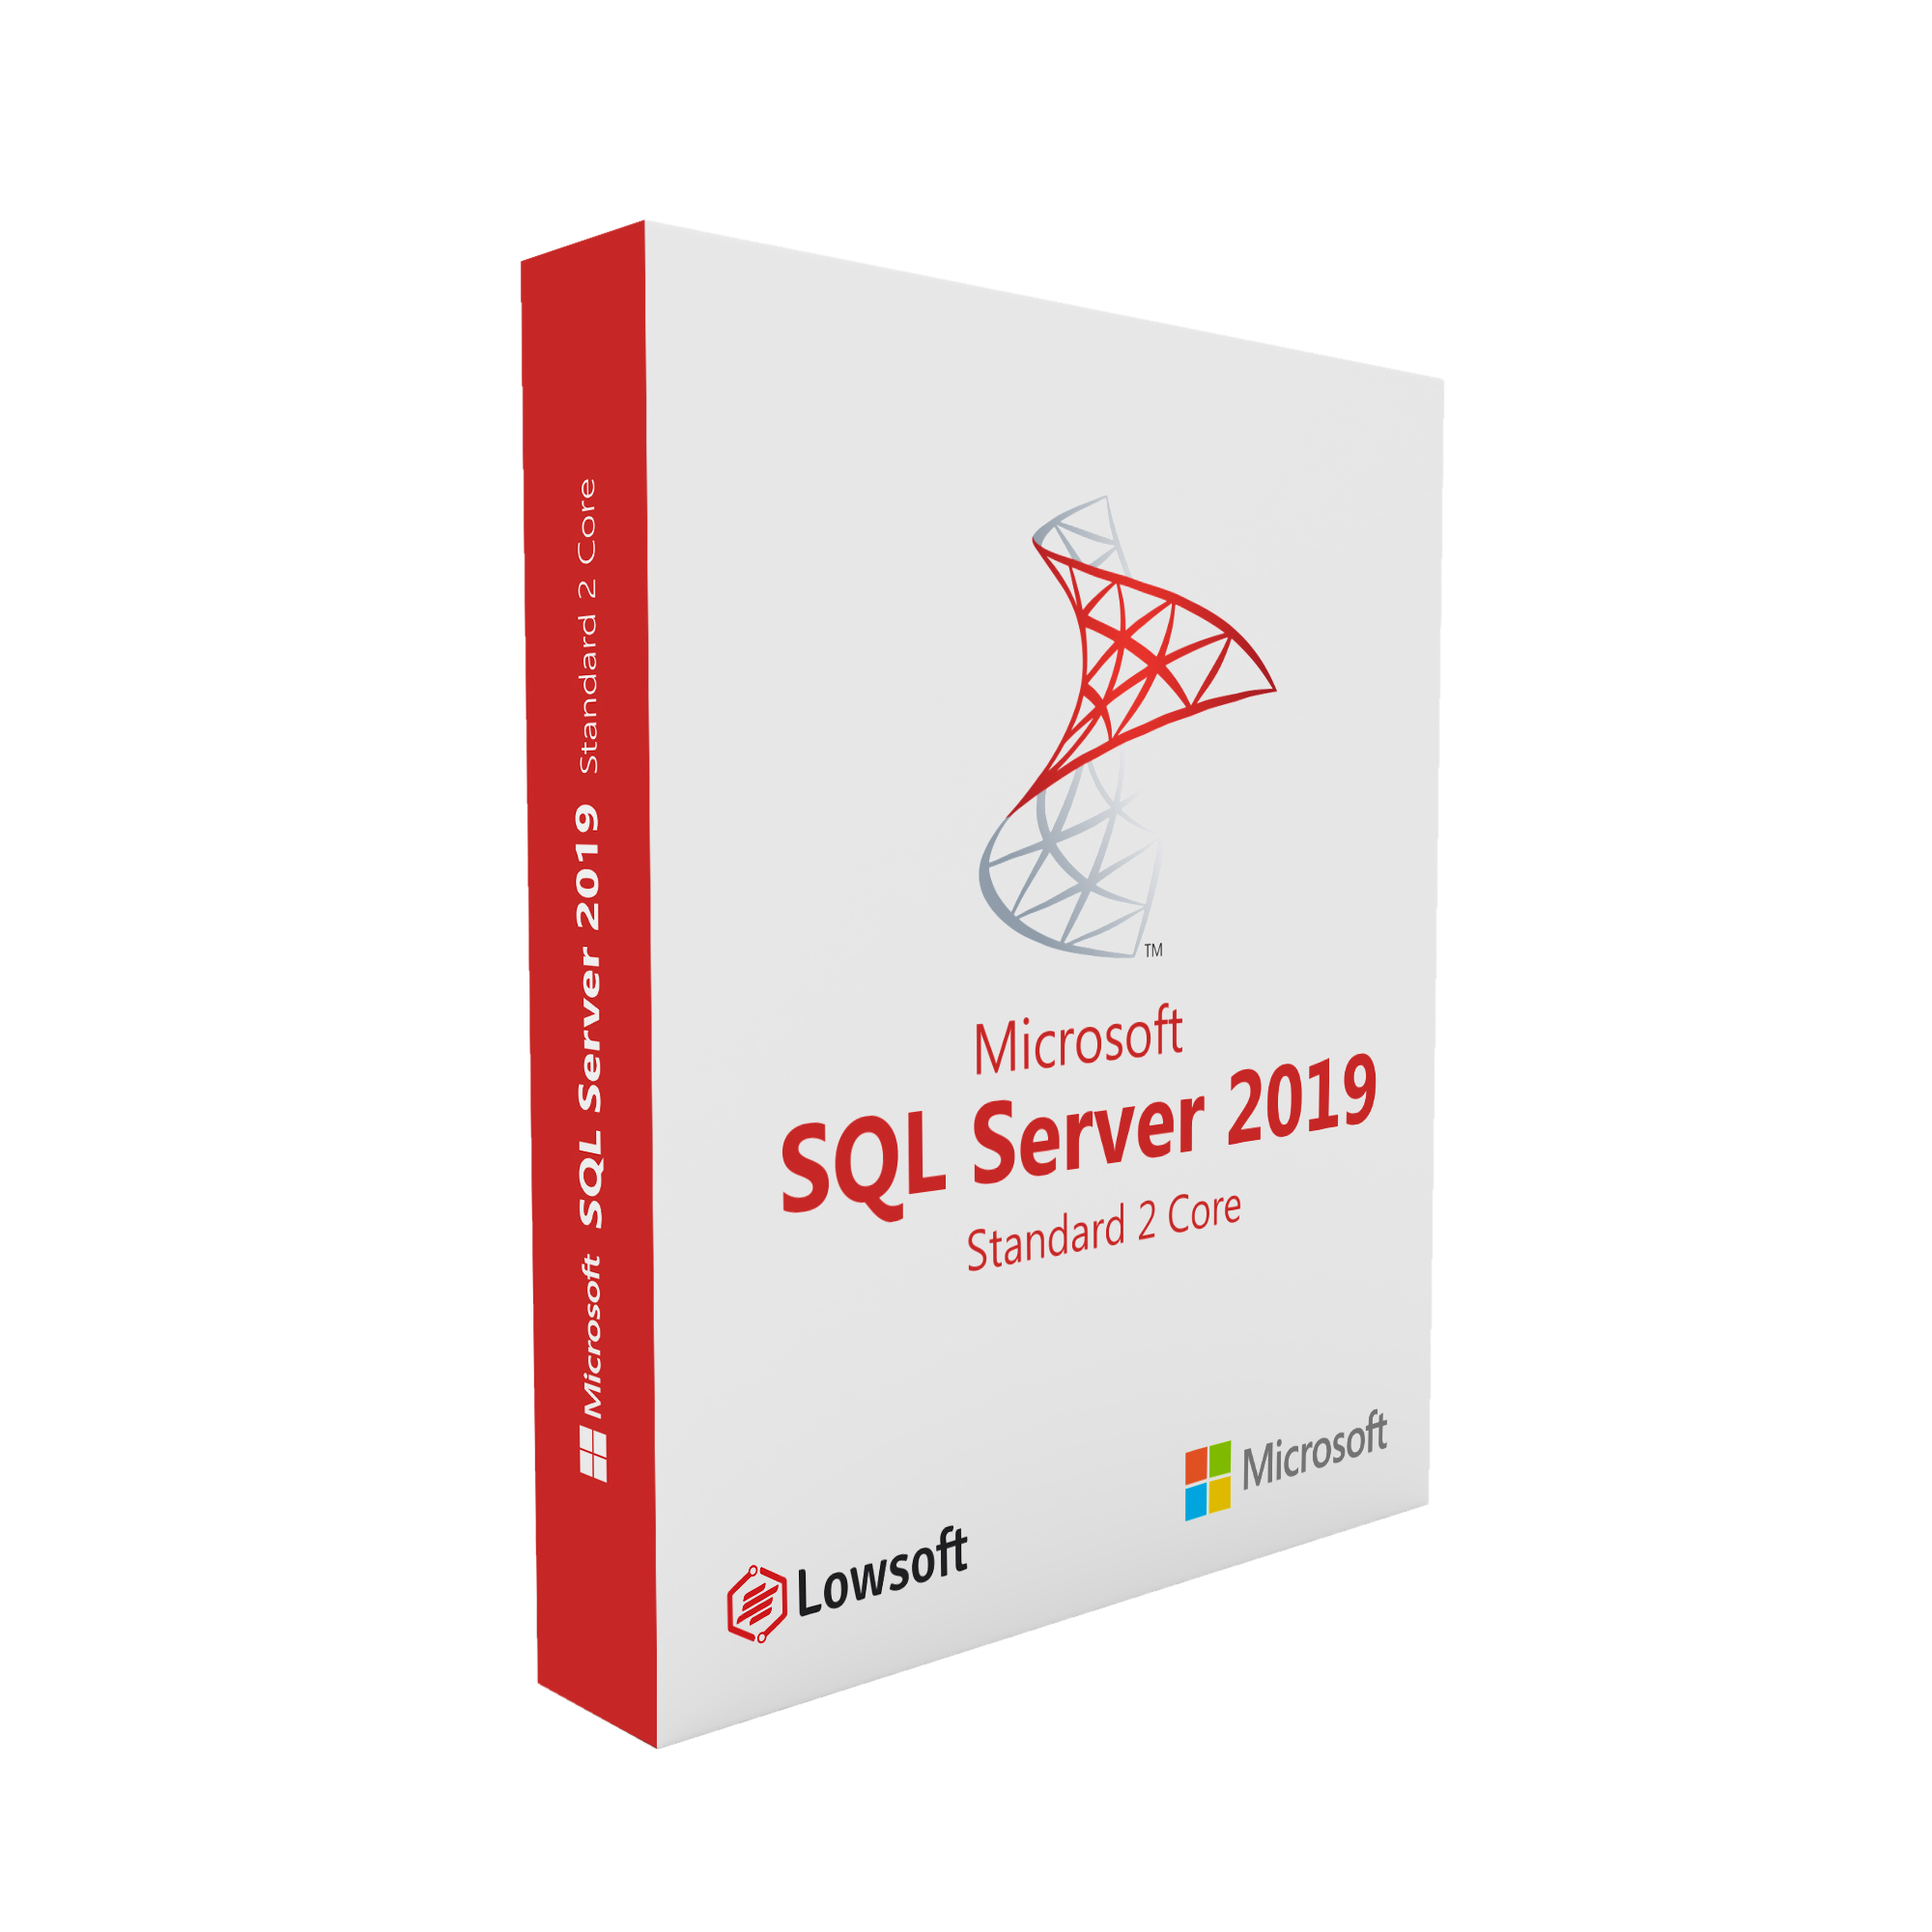 SQL Server 2019 Standard (2 Core)